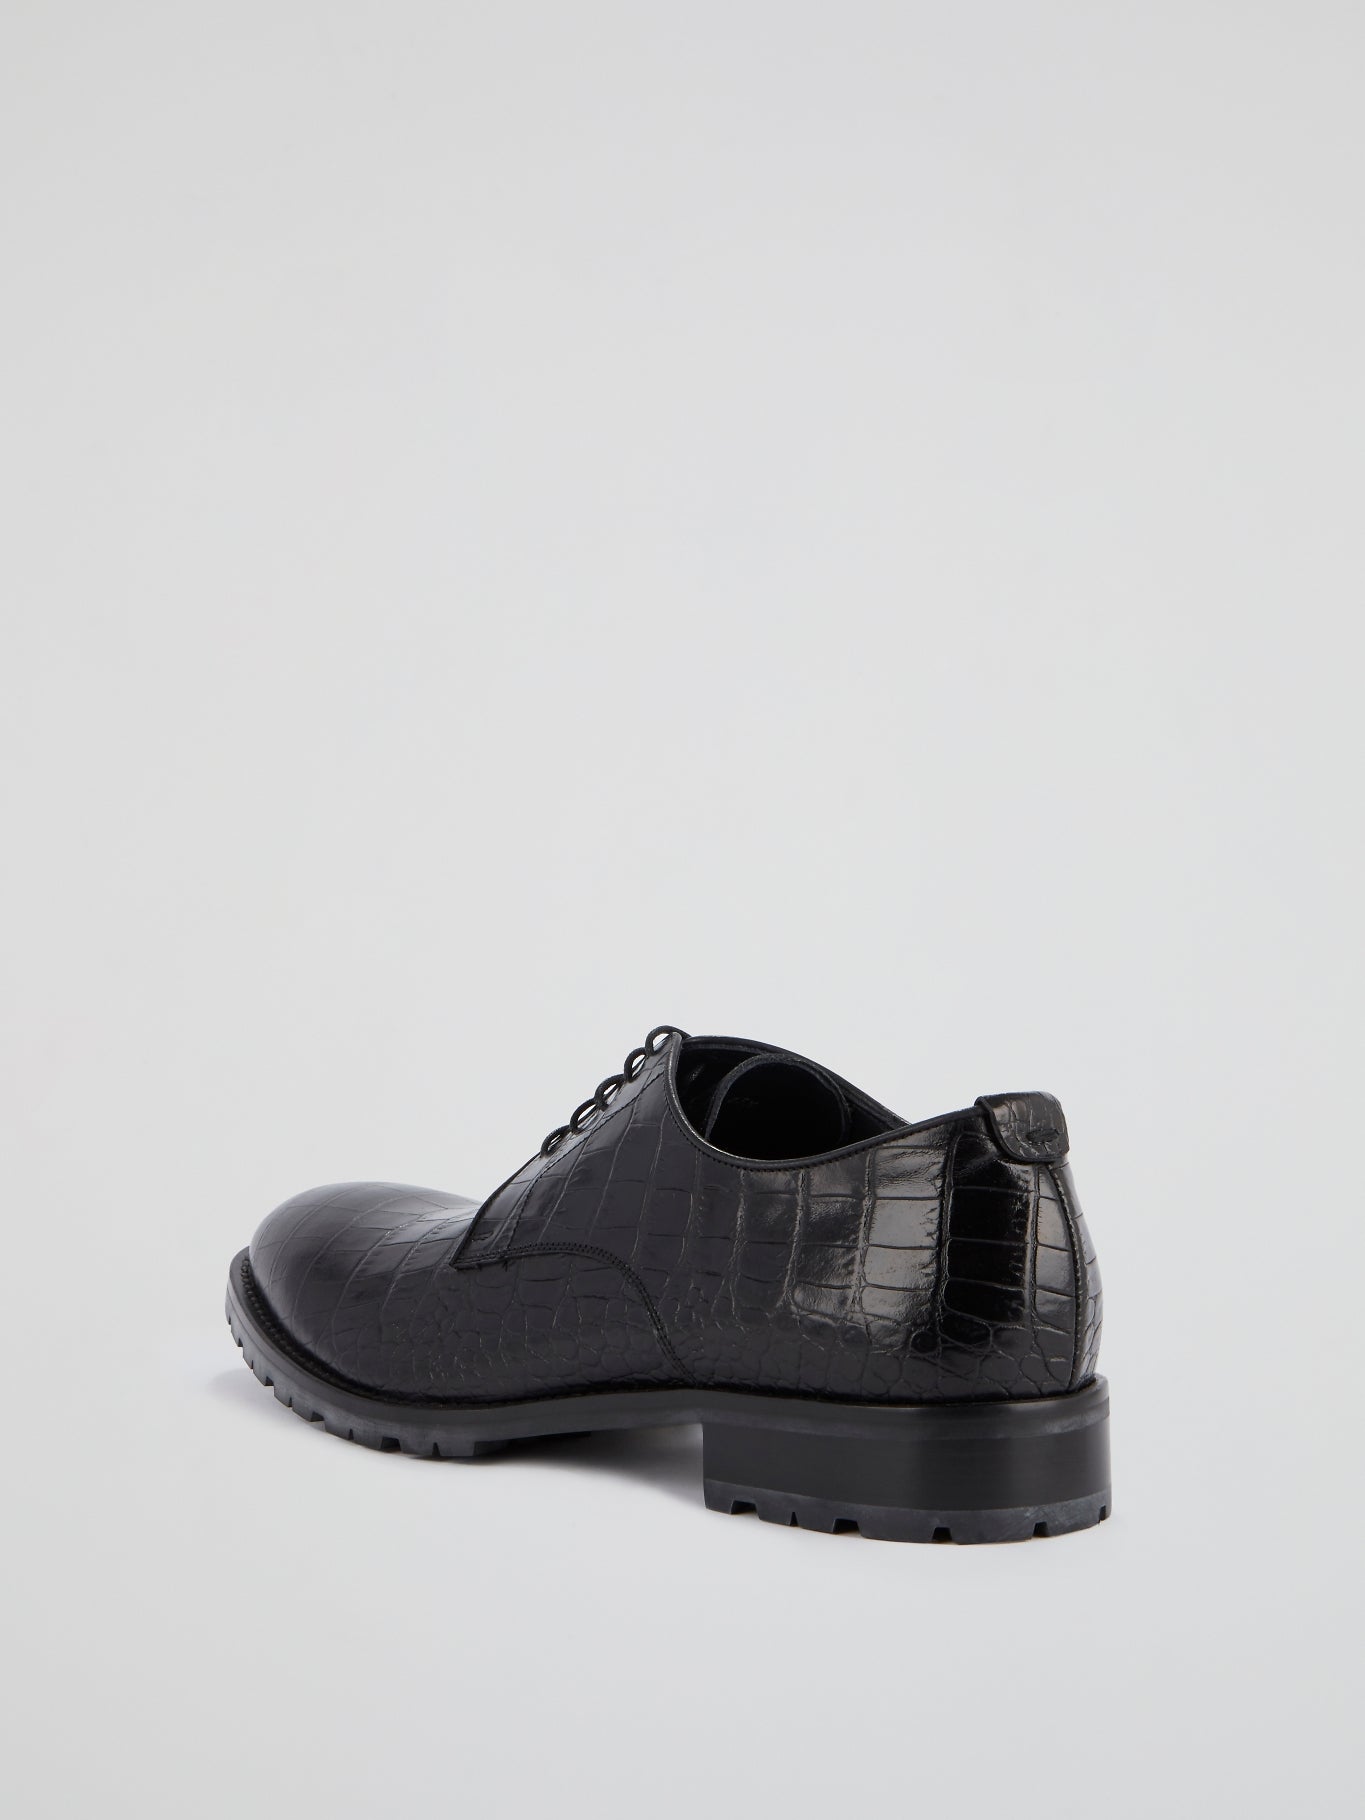 Black Reptilian Leather Shoes